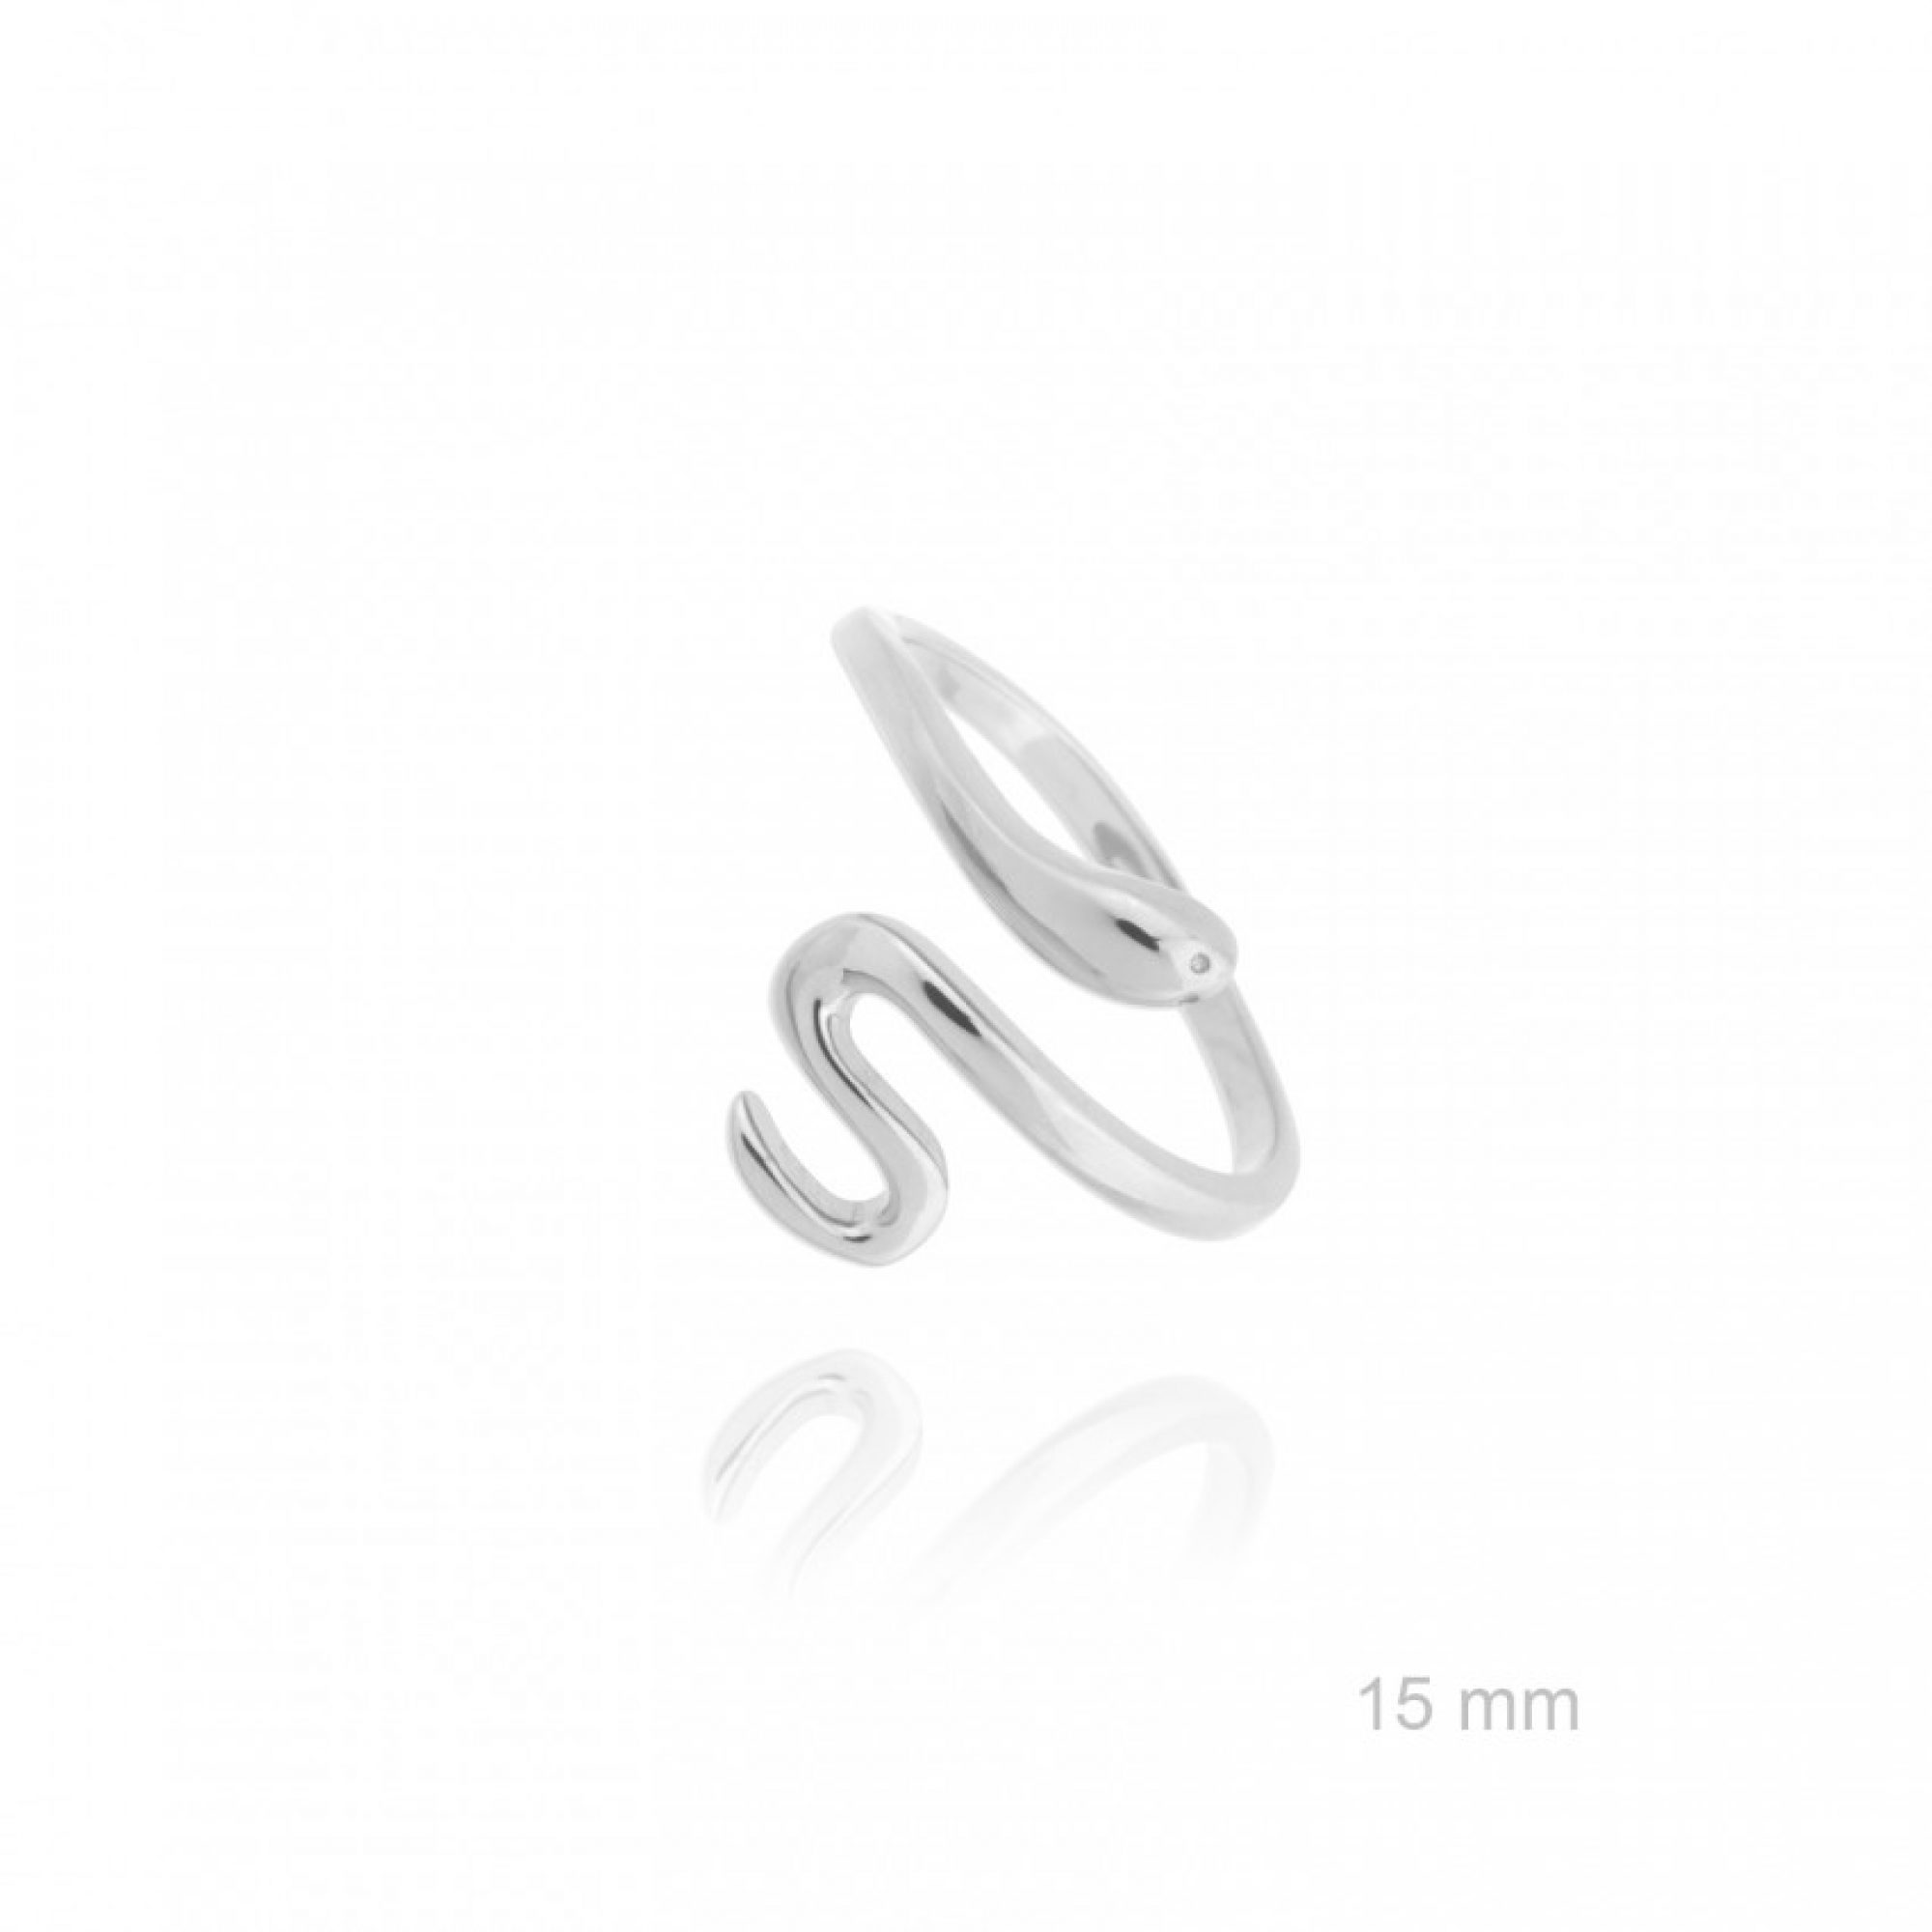 Silver snake ring